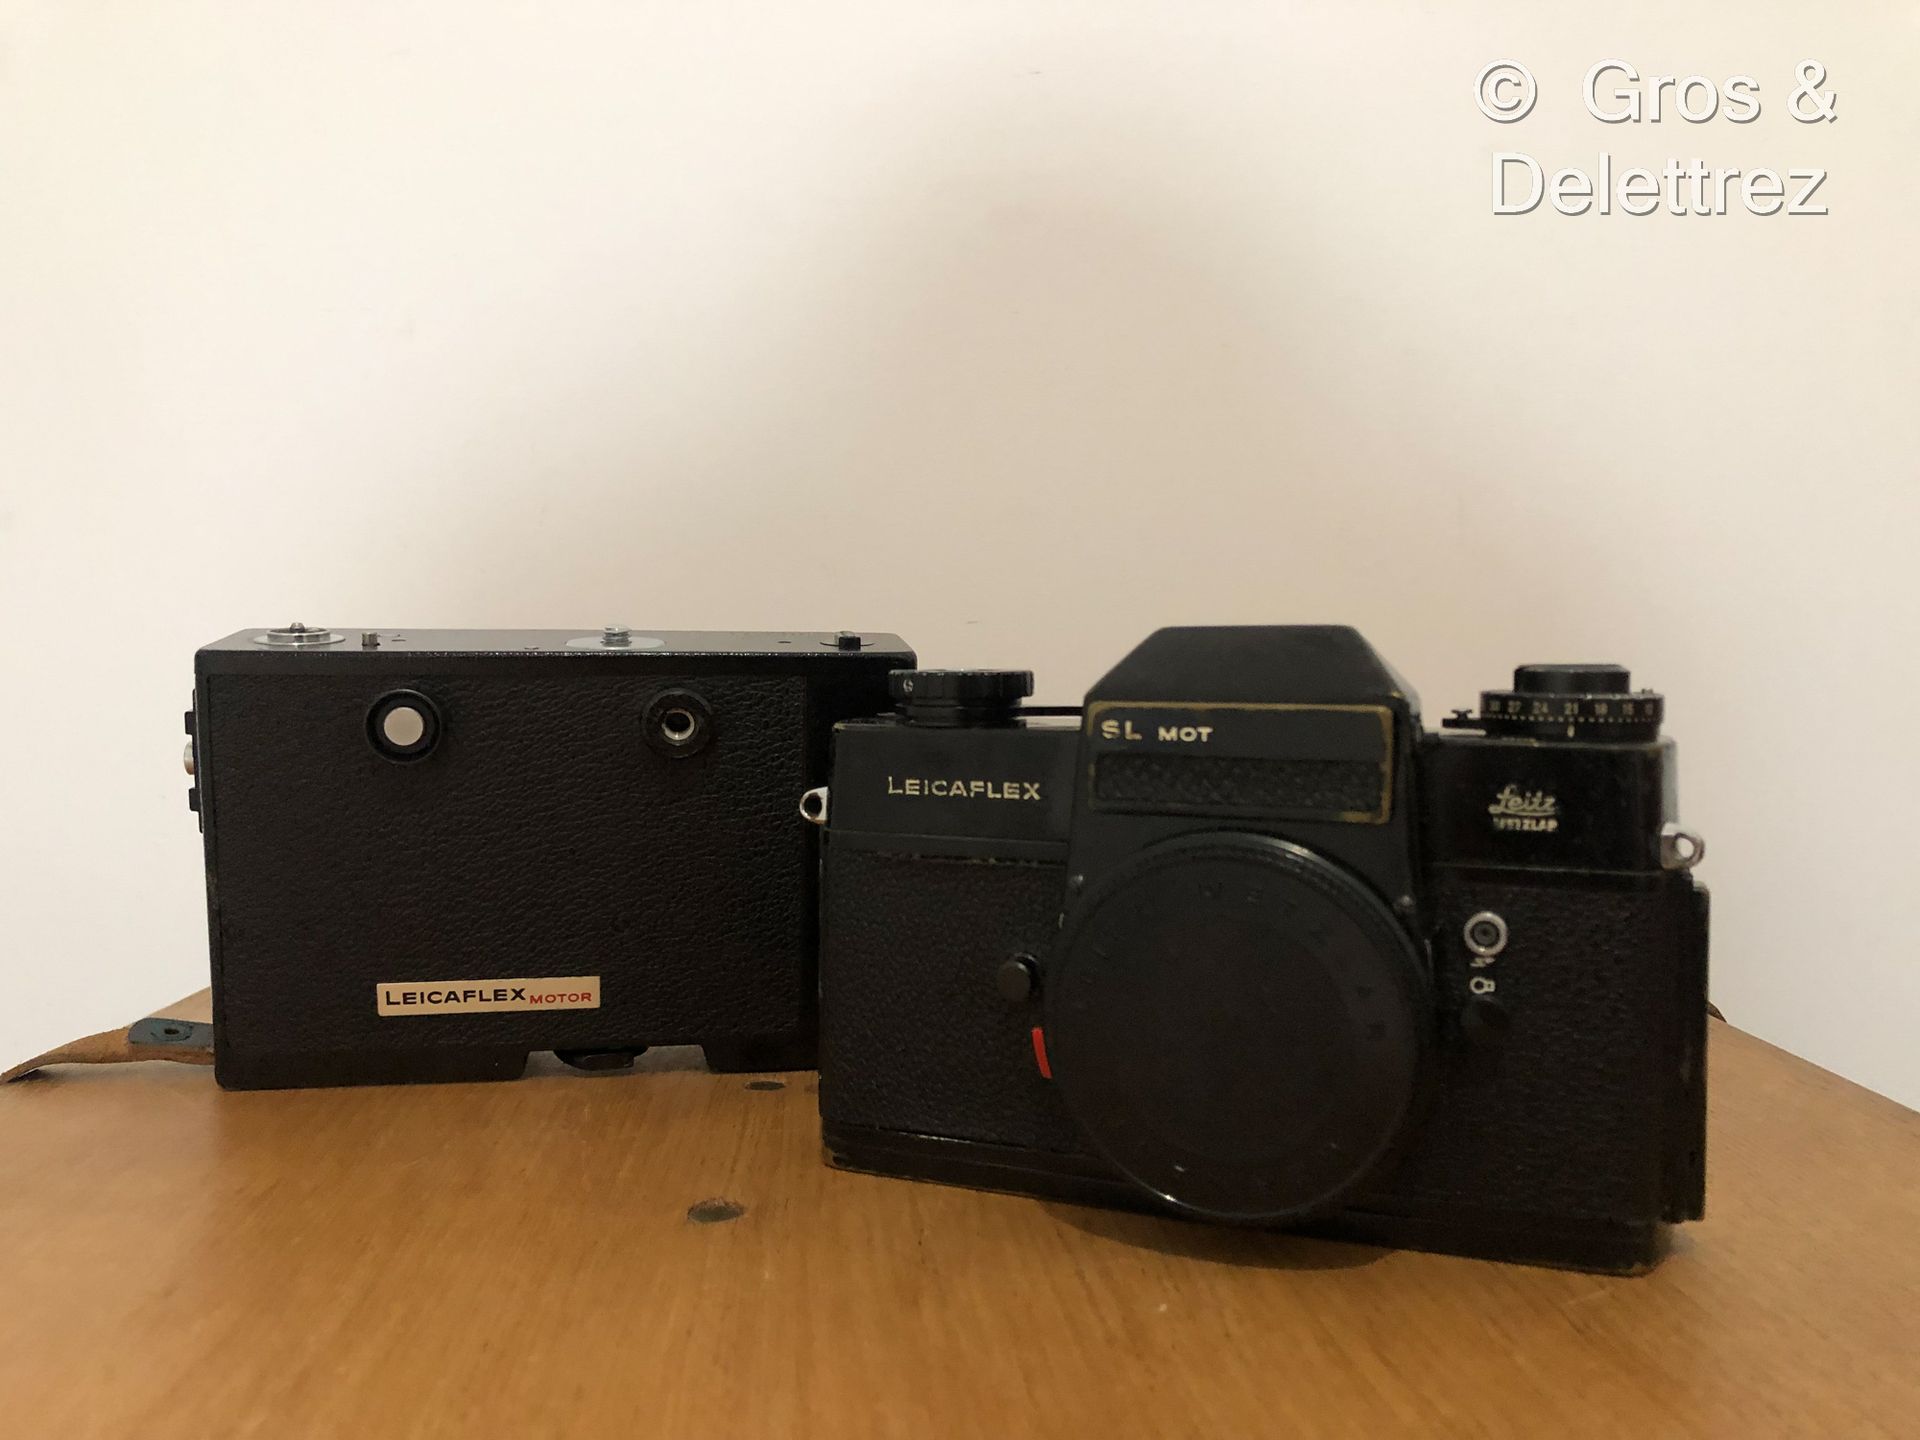 Null (E) Leitz Leicaflex SL Mot (negra, 1970) nº 1260386 sin objetivo con motor &hellip;